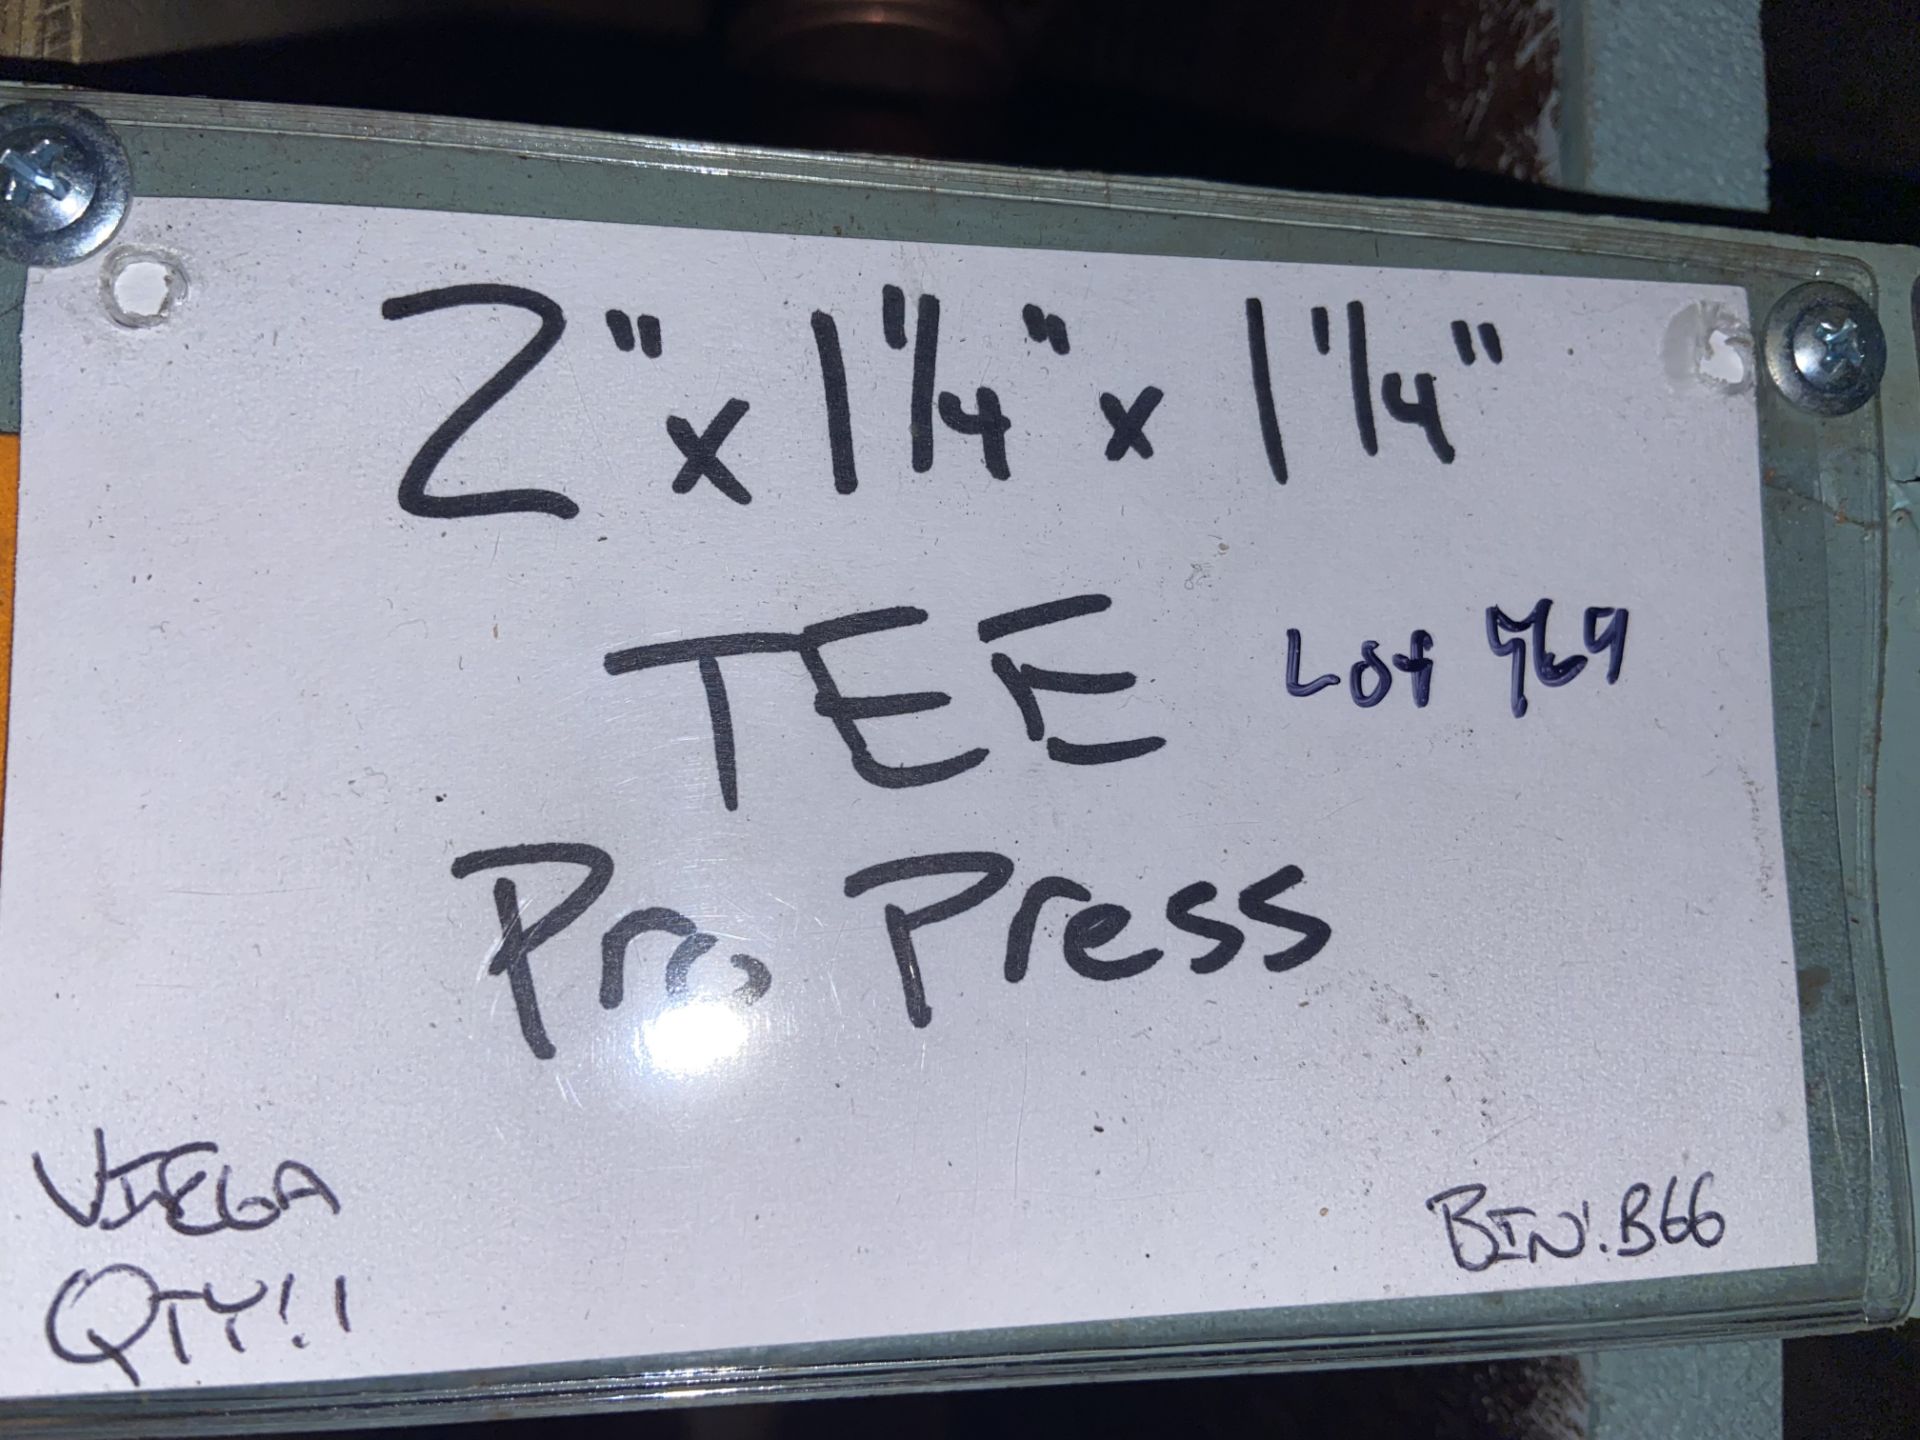 (1) VIEGA 2”x1 1/2” x 1 1/4” Tee Pro Press; (2) NIBCO 1 1/4” 1 1/4”x 1/2” Tee Pro Press; VIEGA (1) - Image 8 of 33